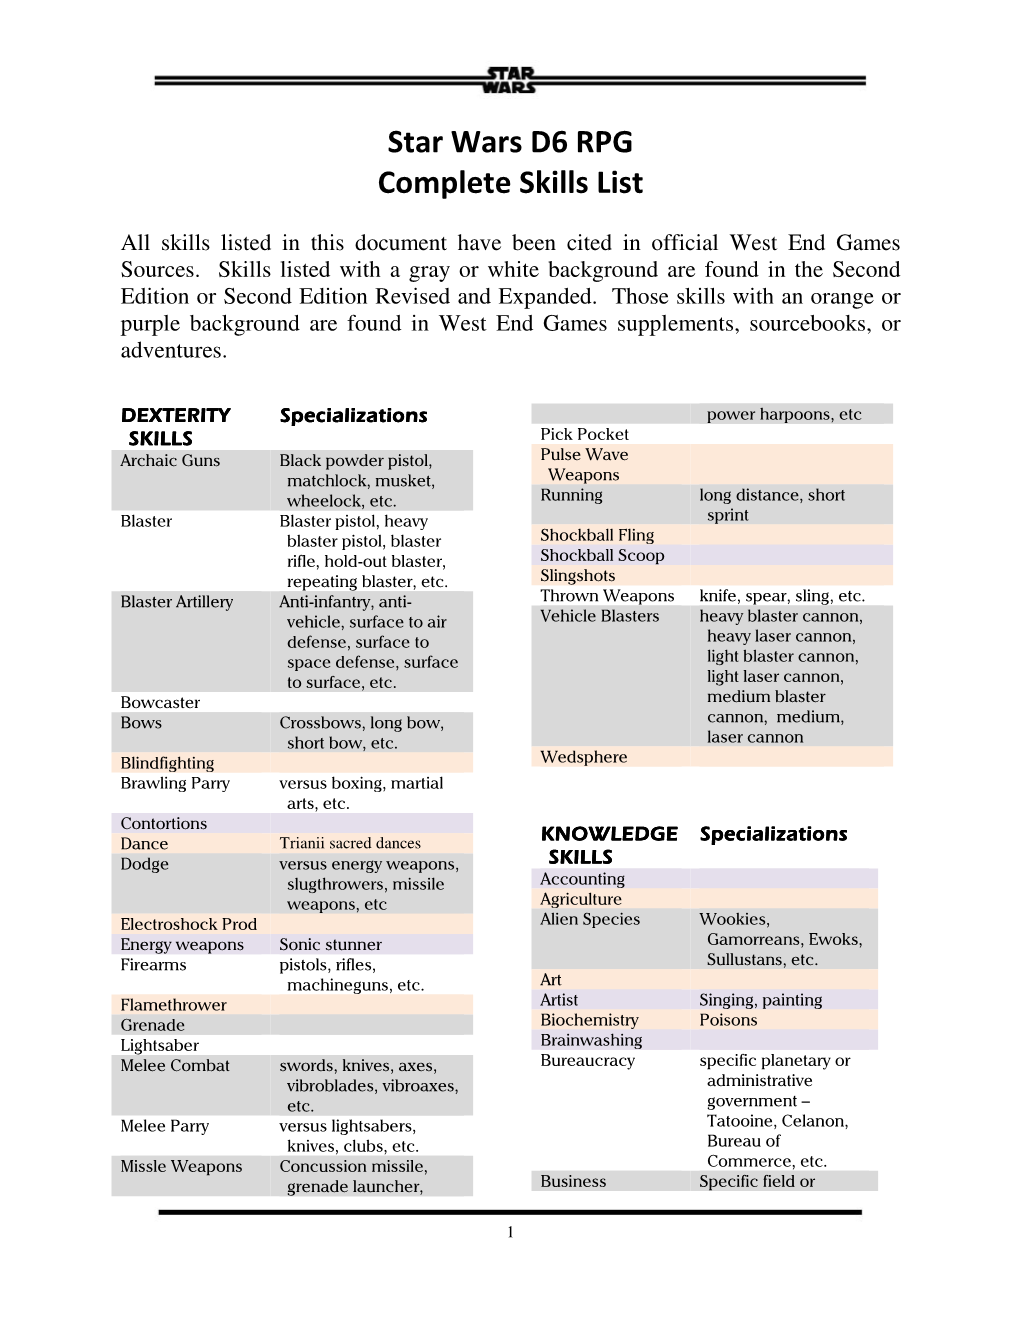 Star Wars D6 RPG Complete Skills List